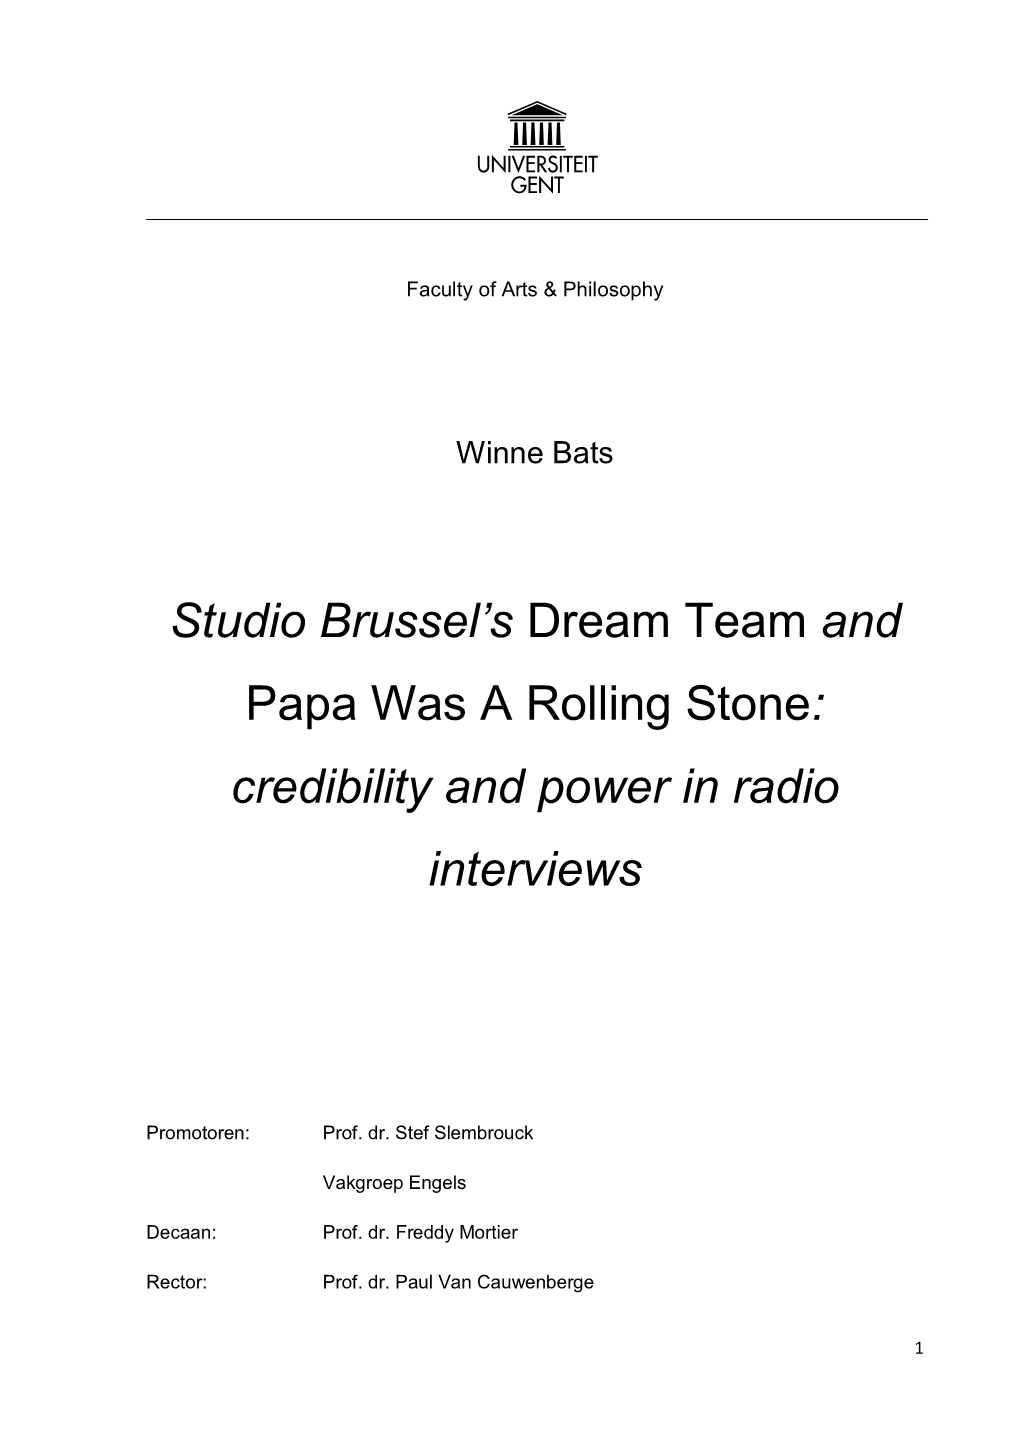 Studio Brussel's Dream Team and Papa